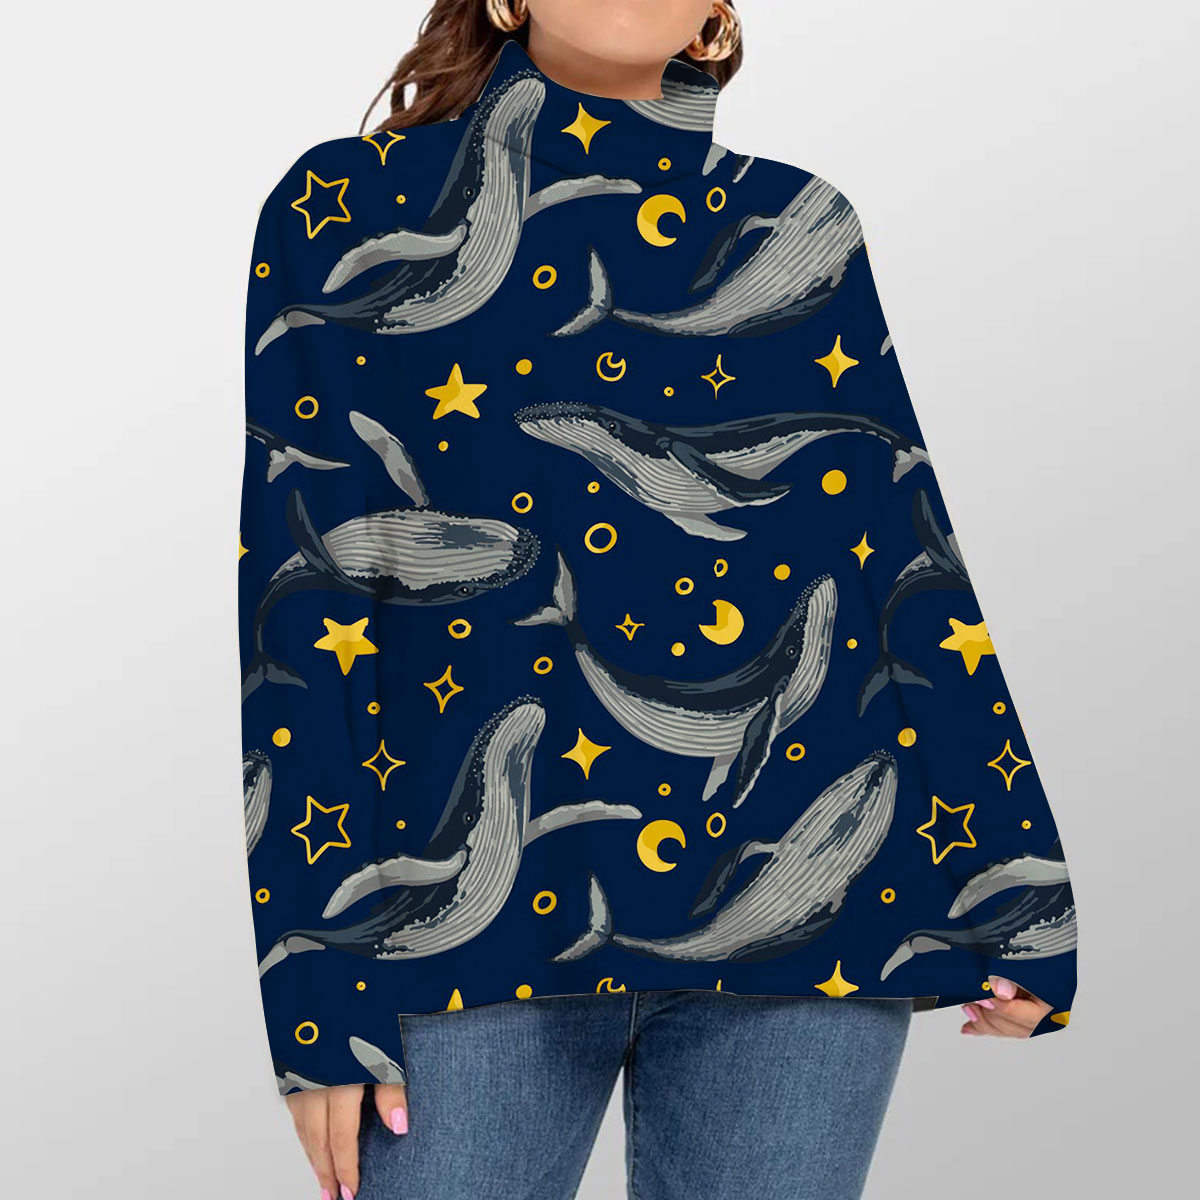 Starlight Blue Whale Turtleneck Sweater